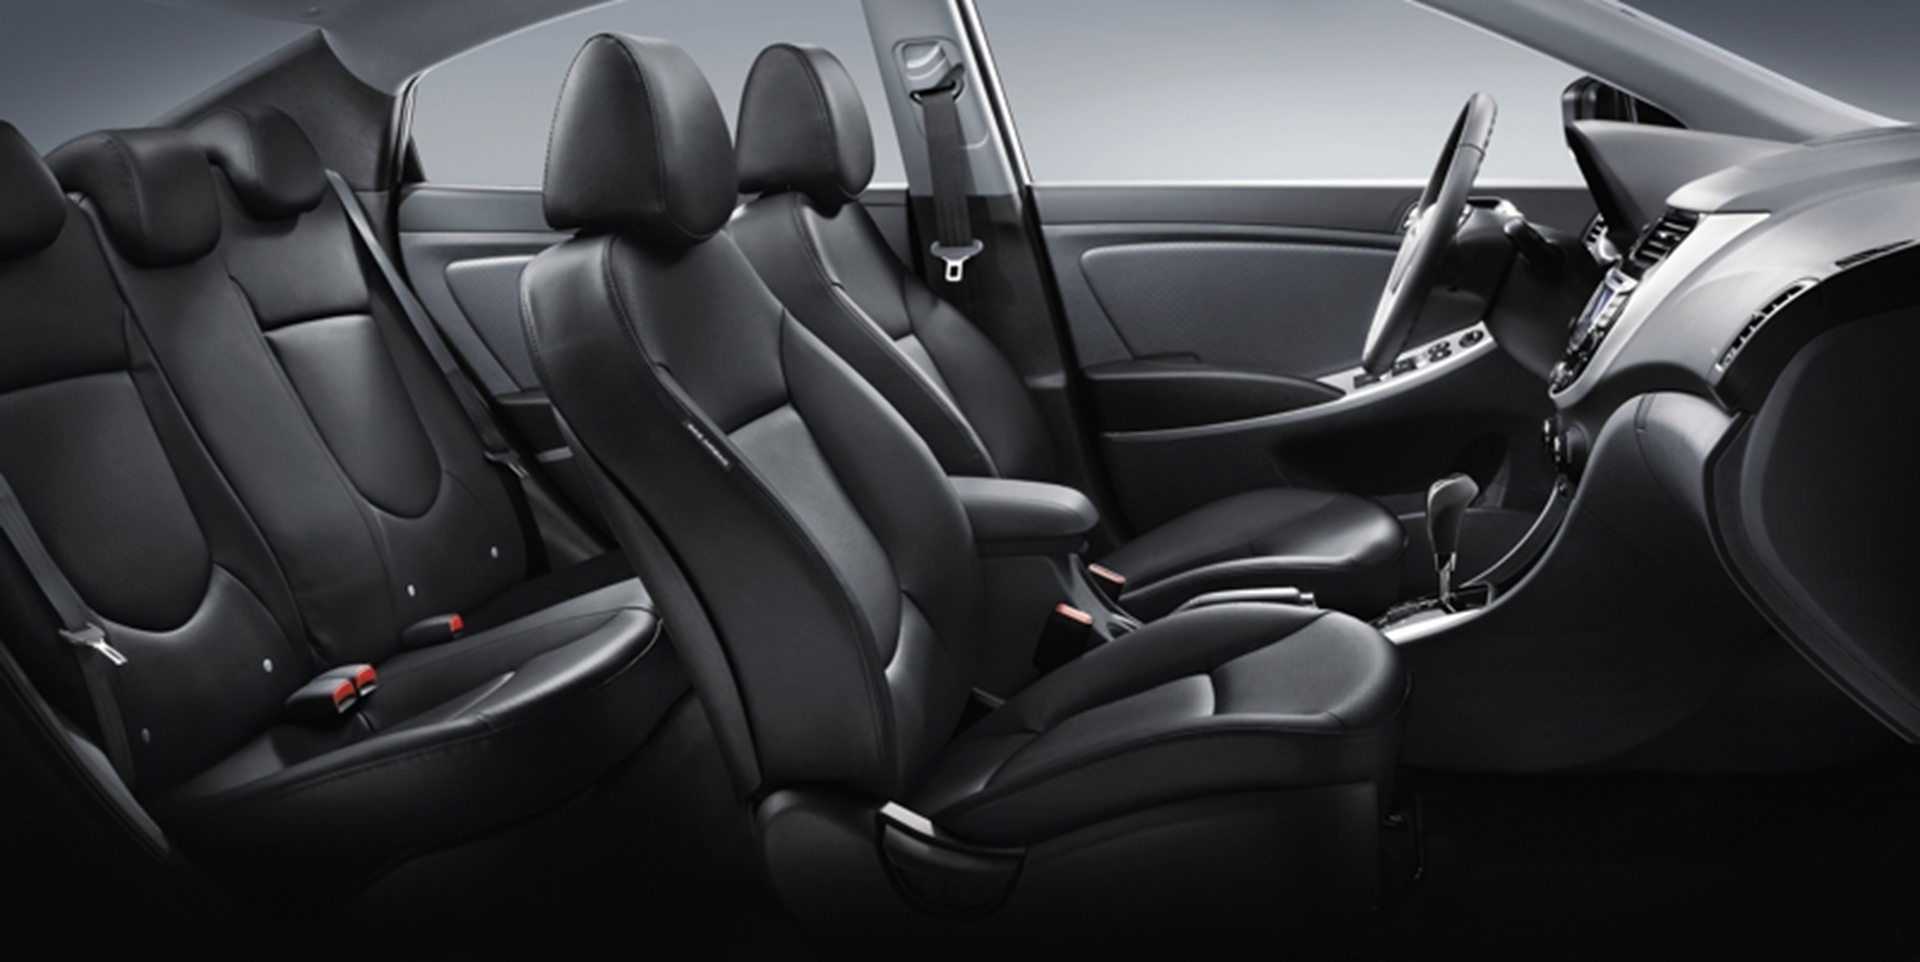 Hyundai Accent Seat